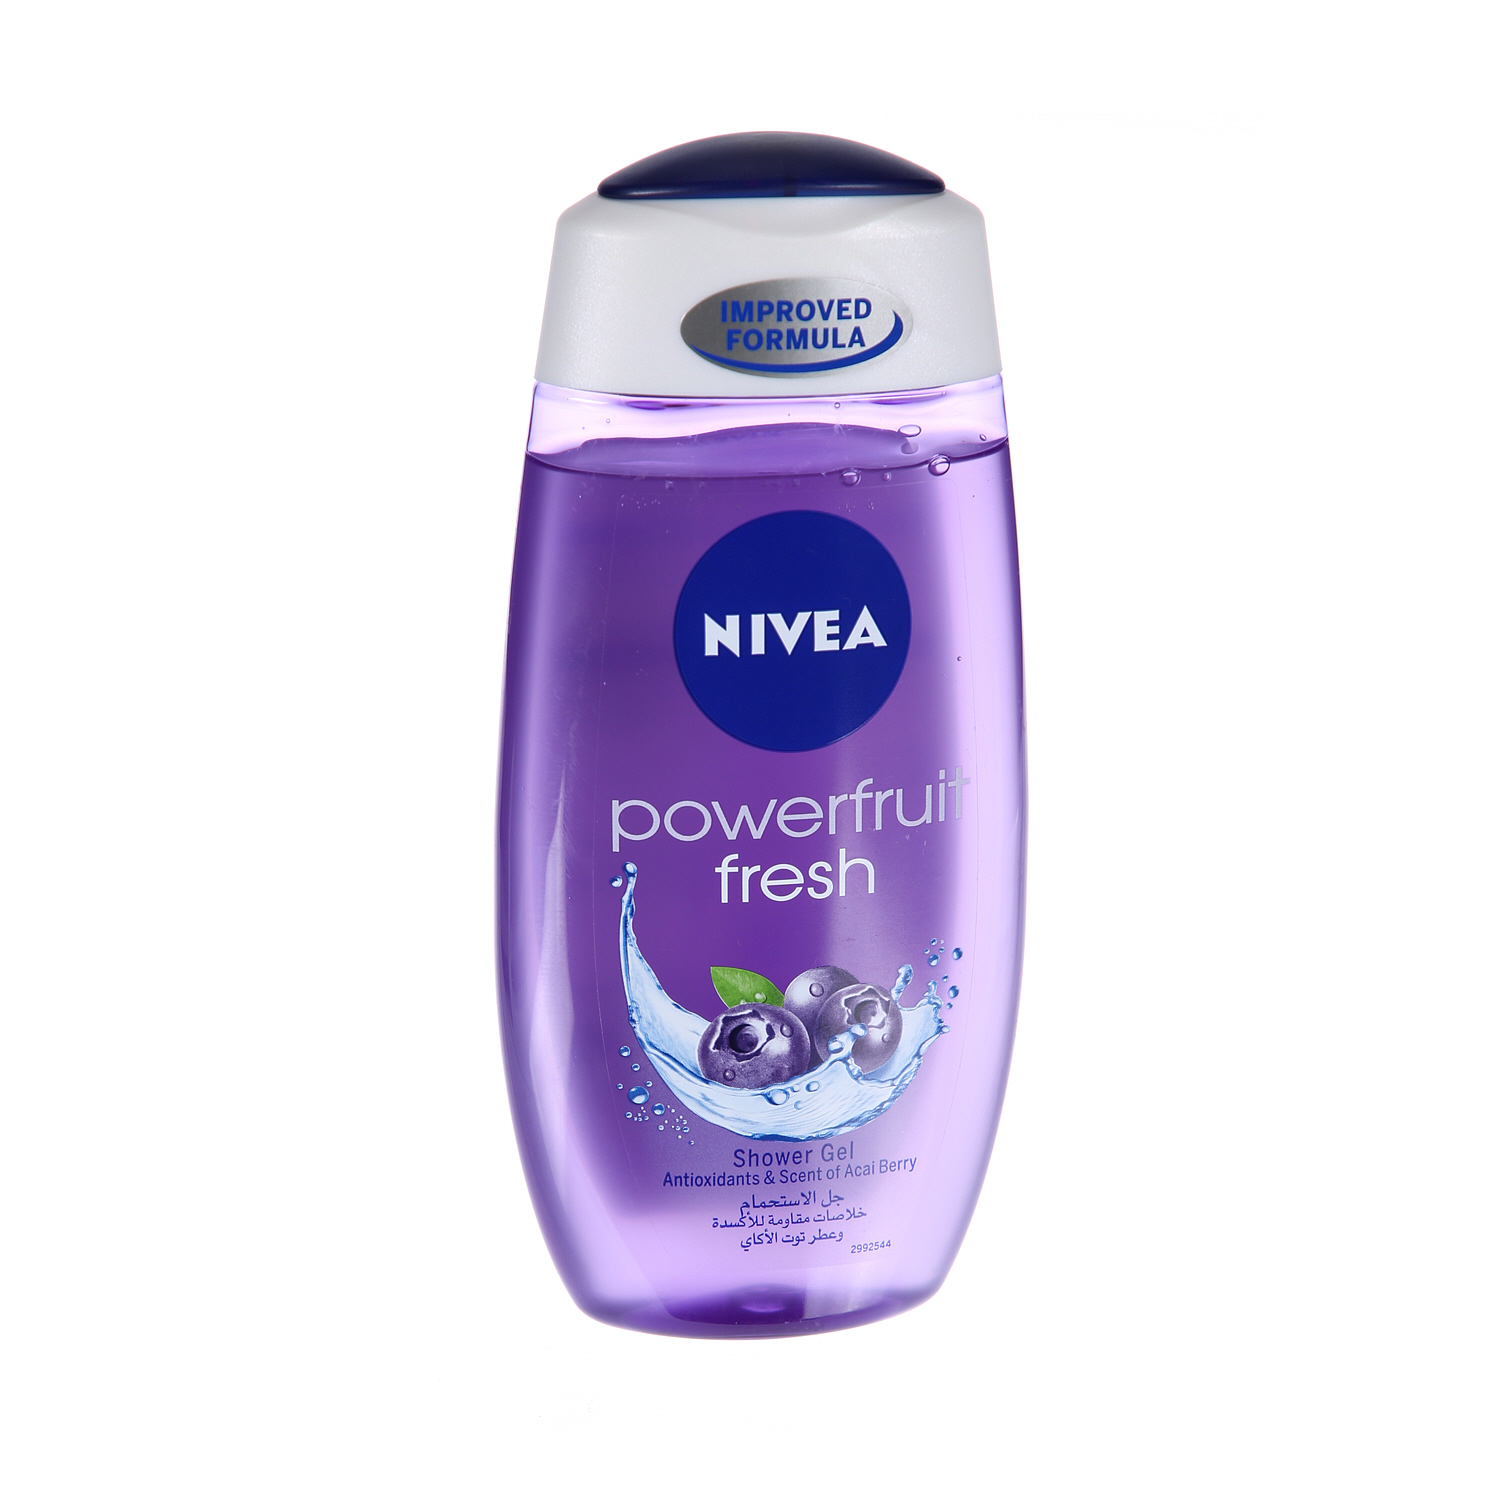 Nivea Shower Gel Body Wash Fresh Powerfruit Antioxidants Blueberry Scent 250 ml